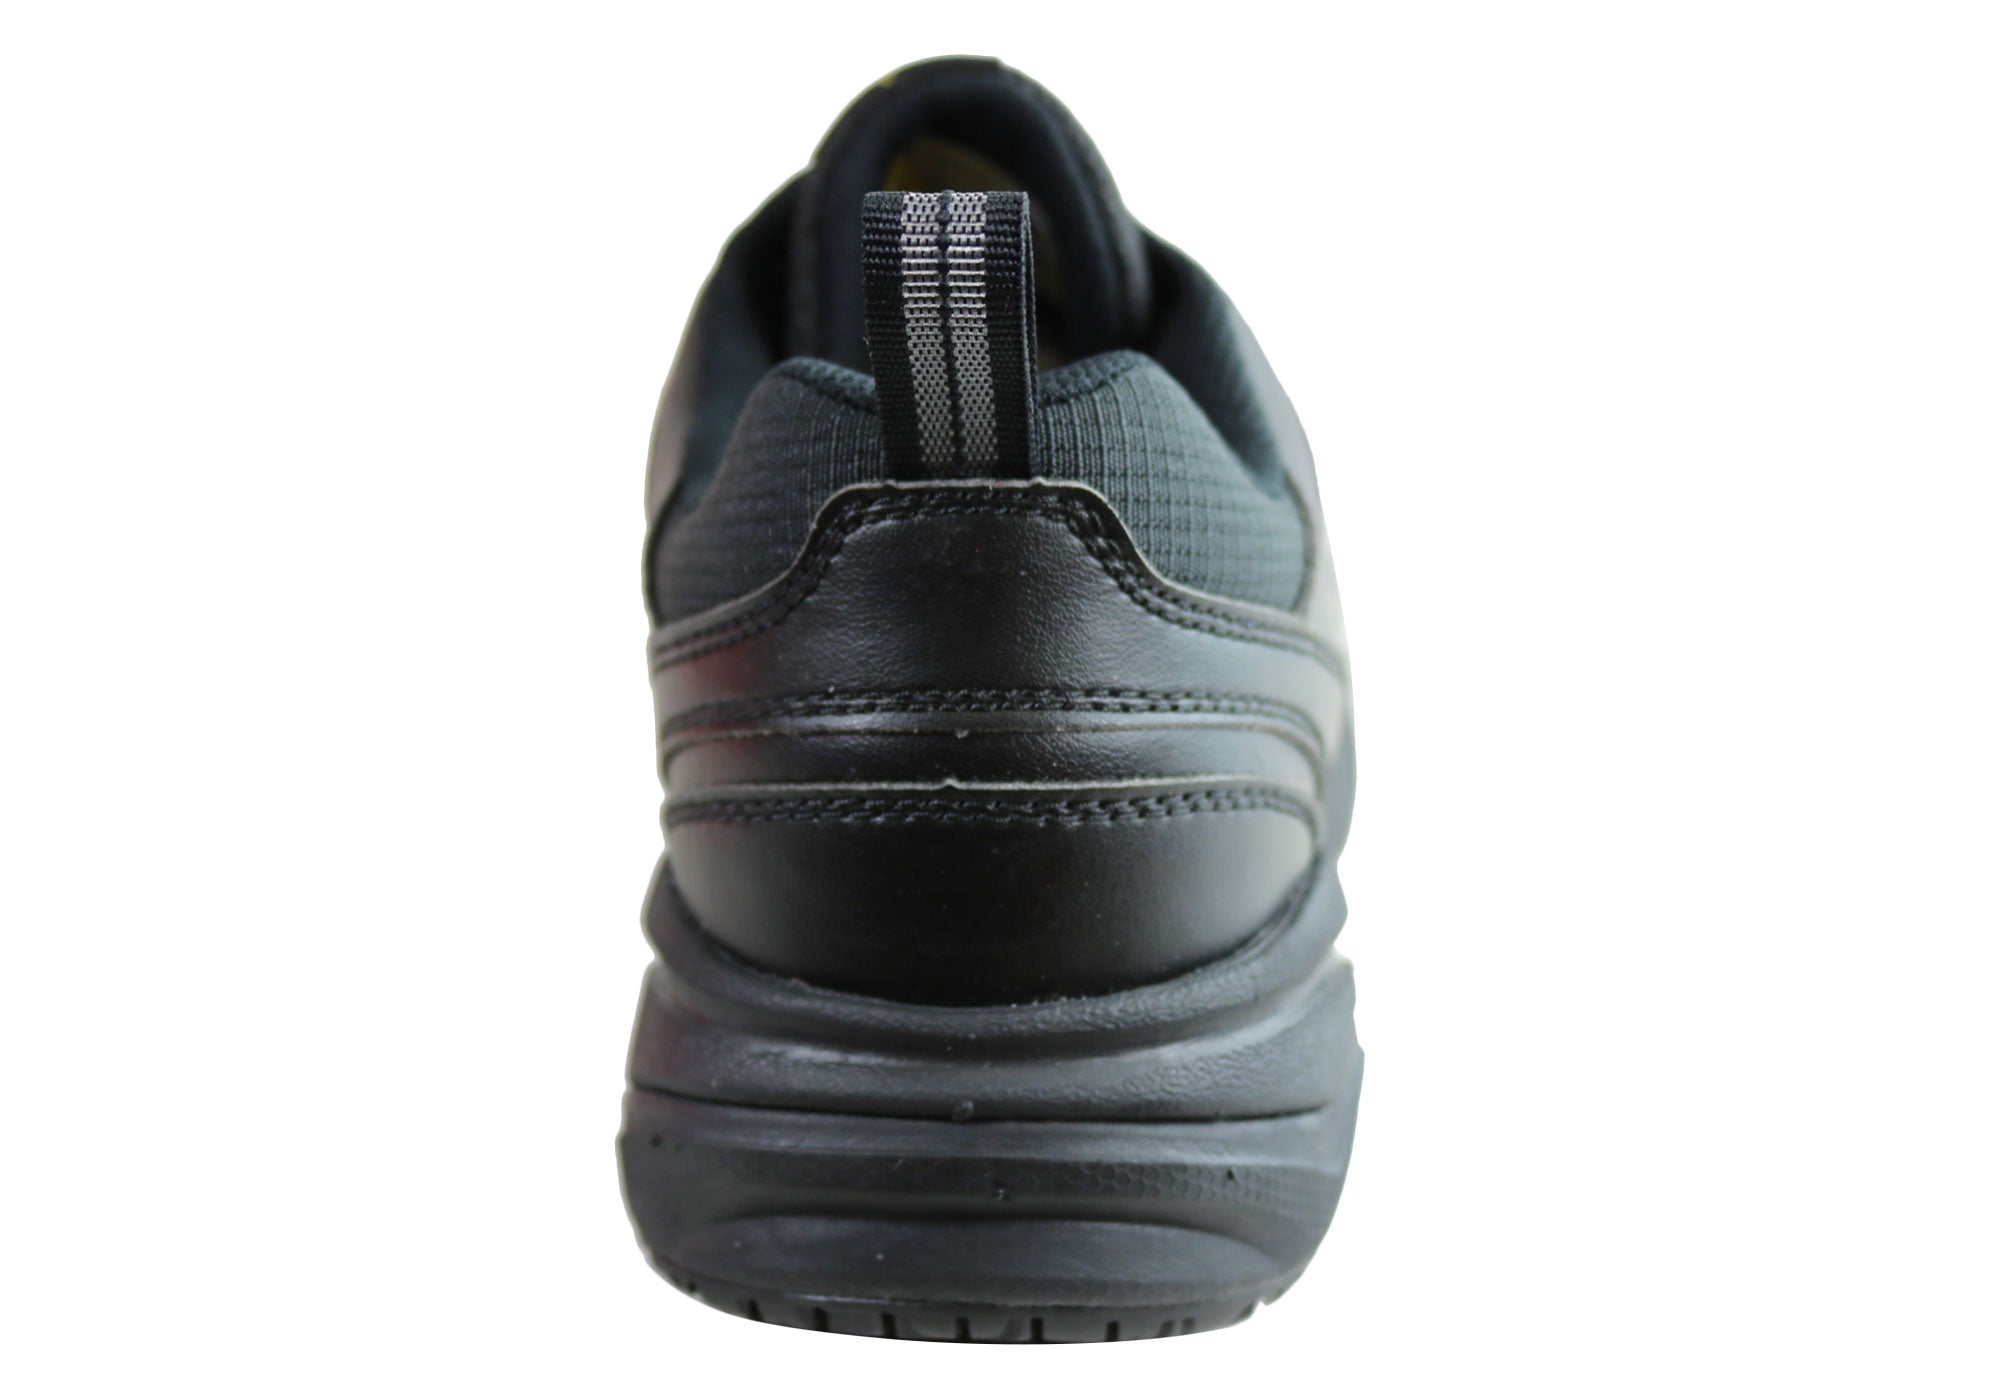 new balance men's steel toe sneakers